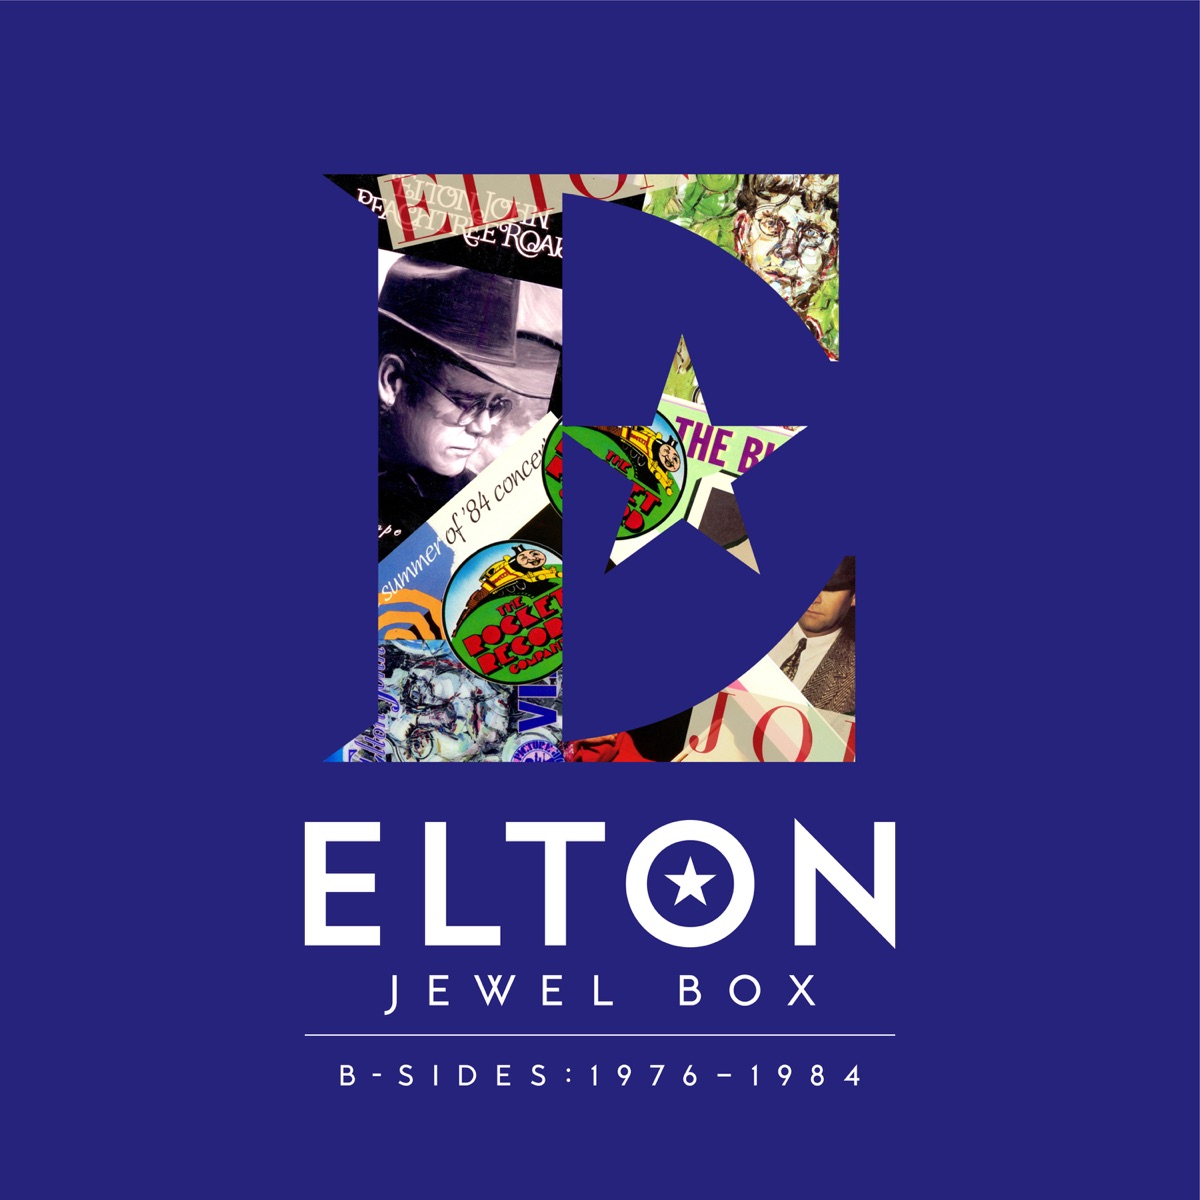 Jewel Box - Album by Elton John - Apple Music